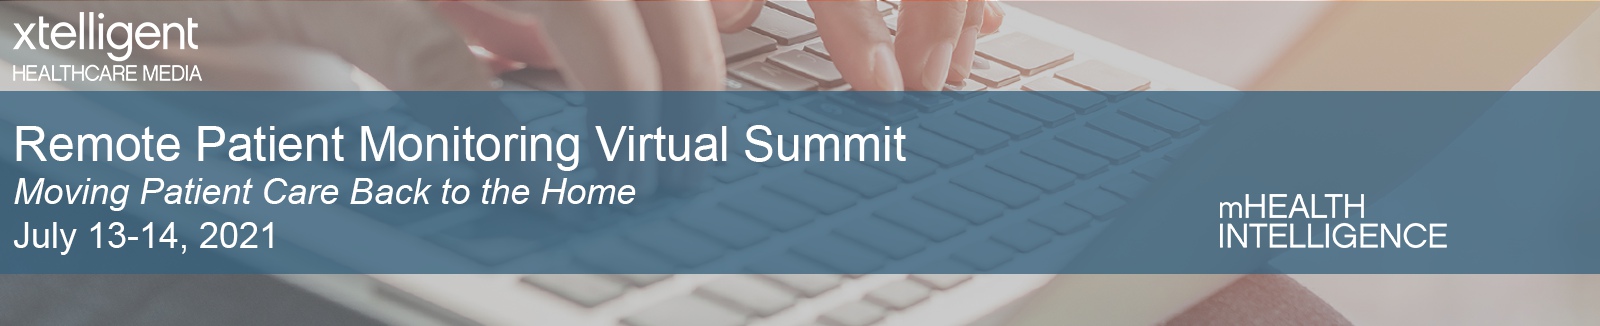 Remote Patient Monitoring Virtual Summit